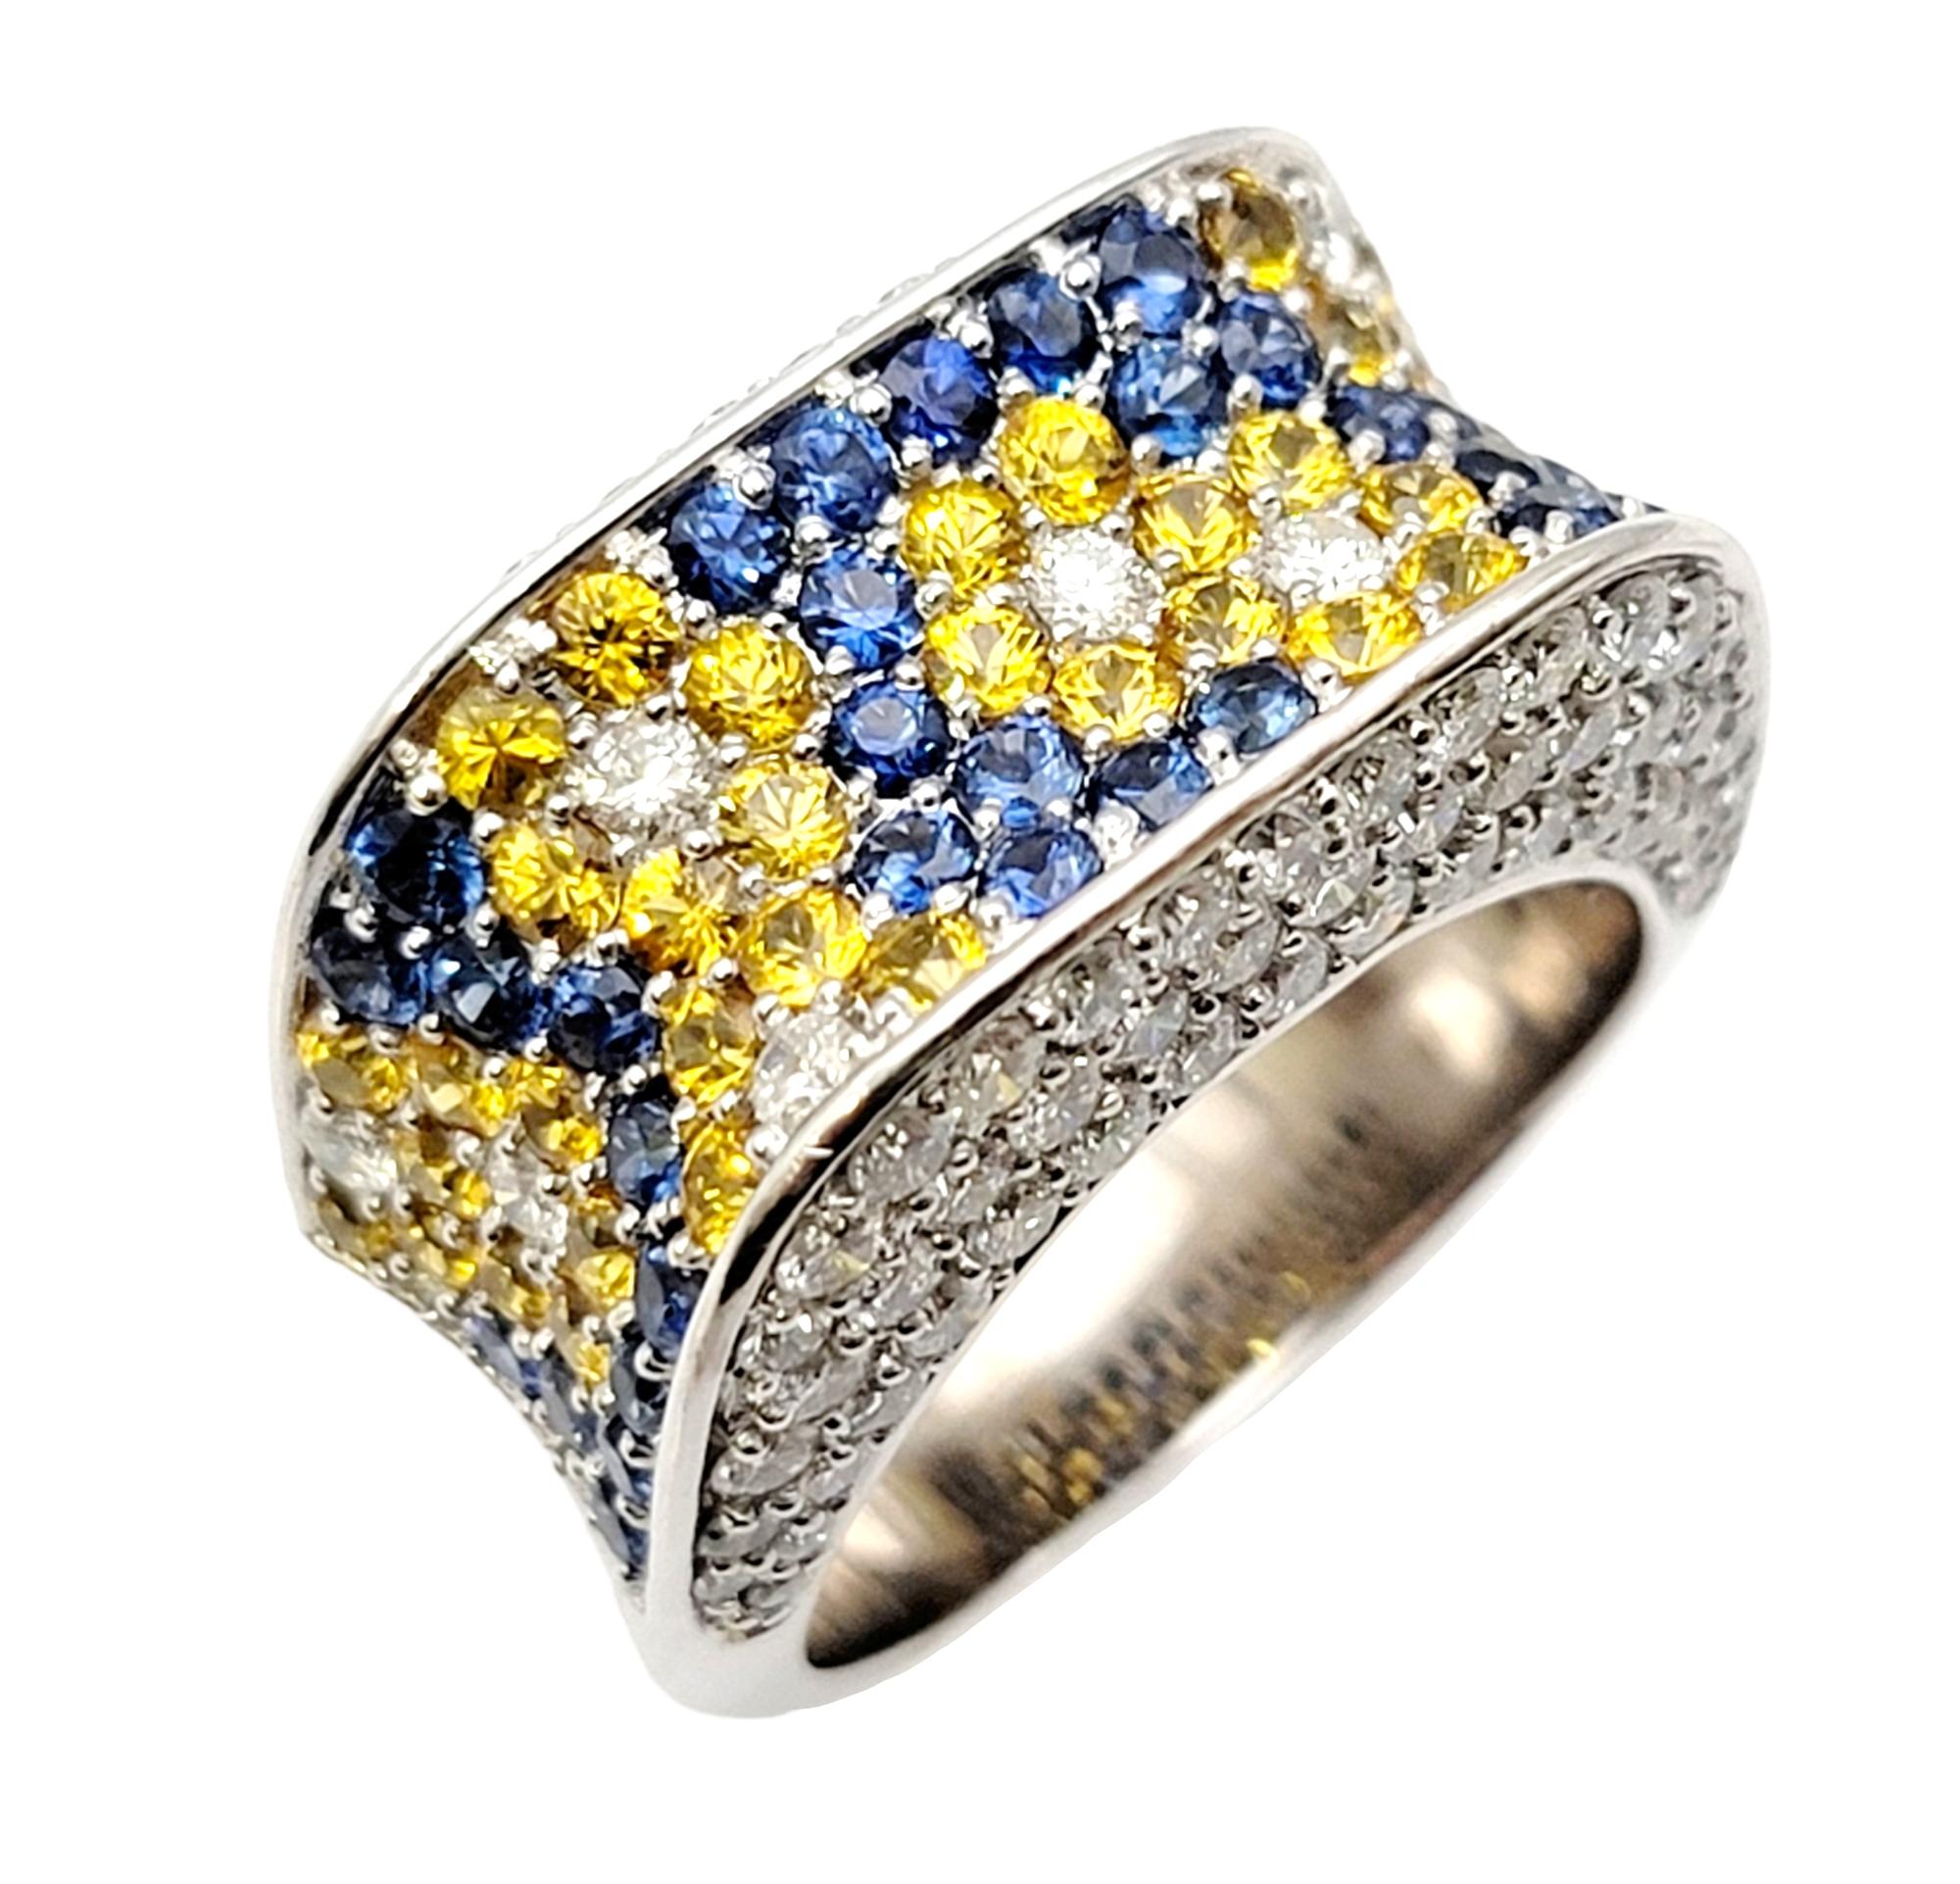 gold saddle ring with diamonds